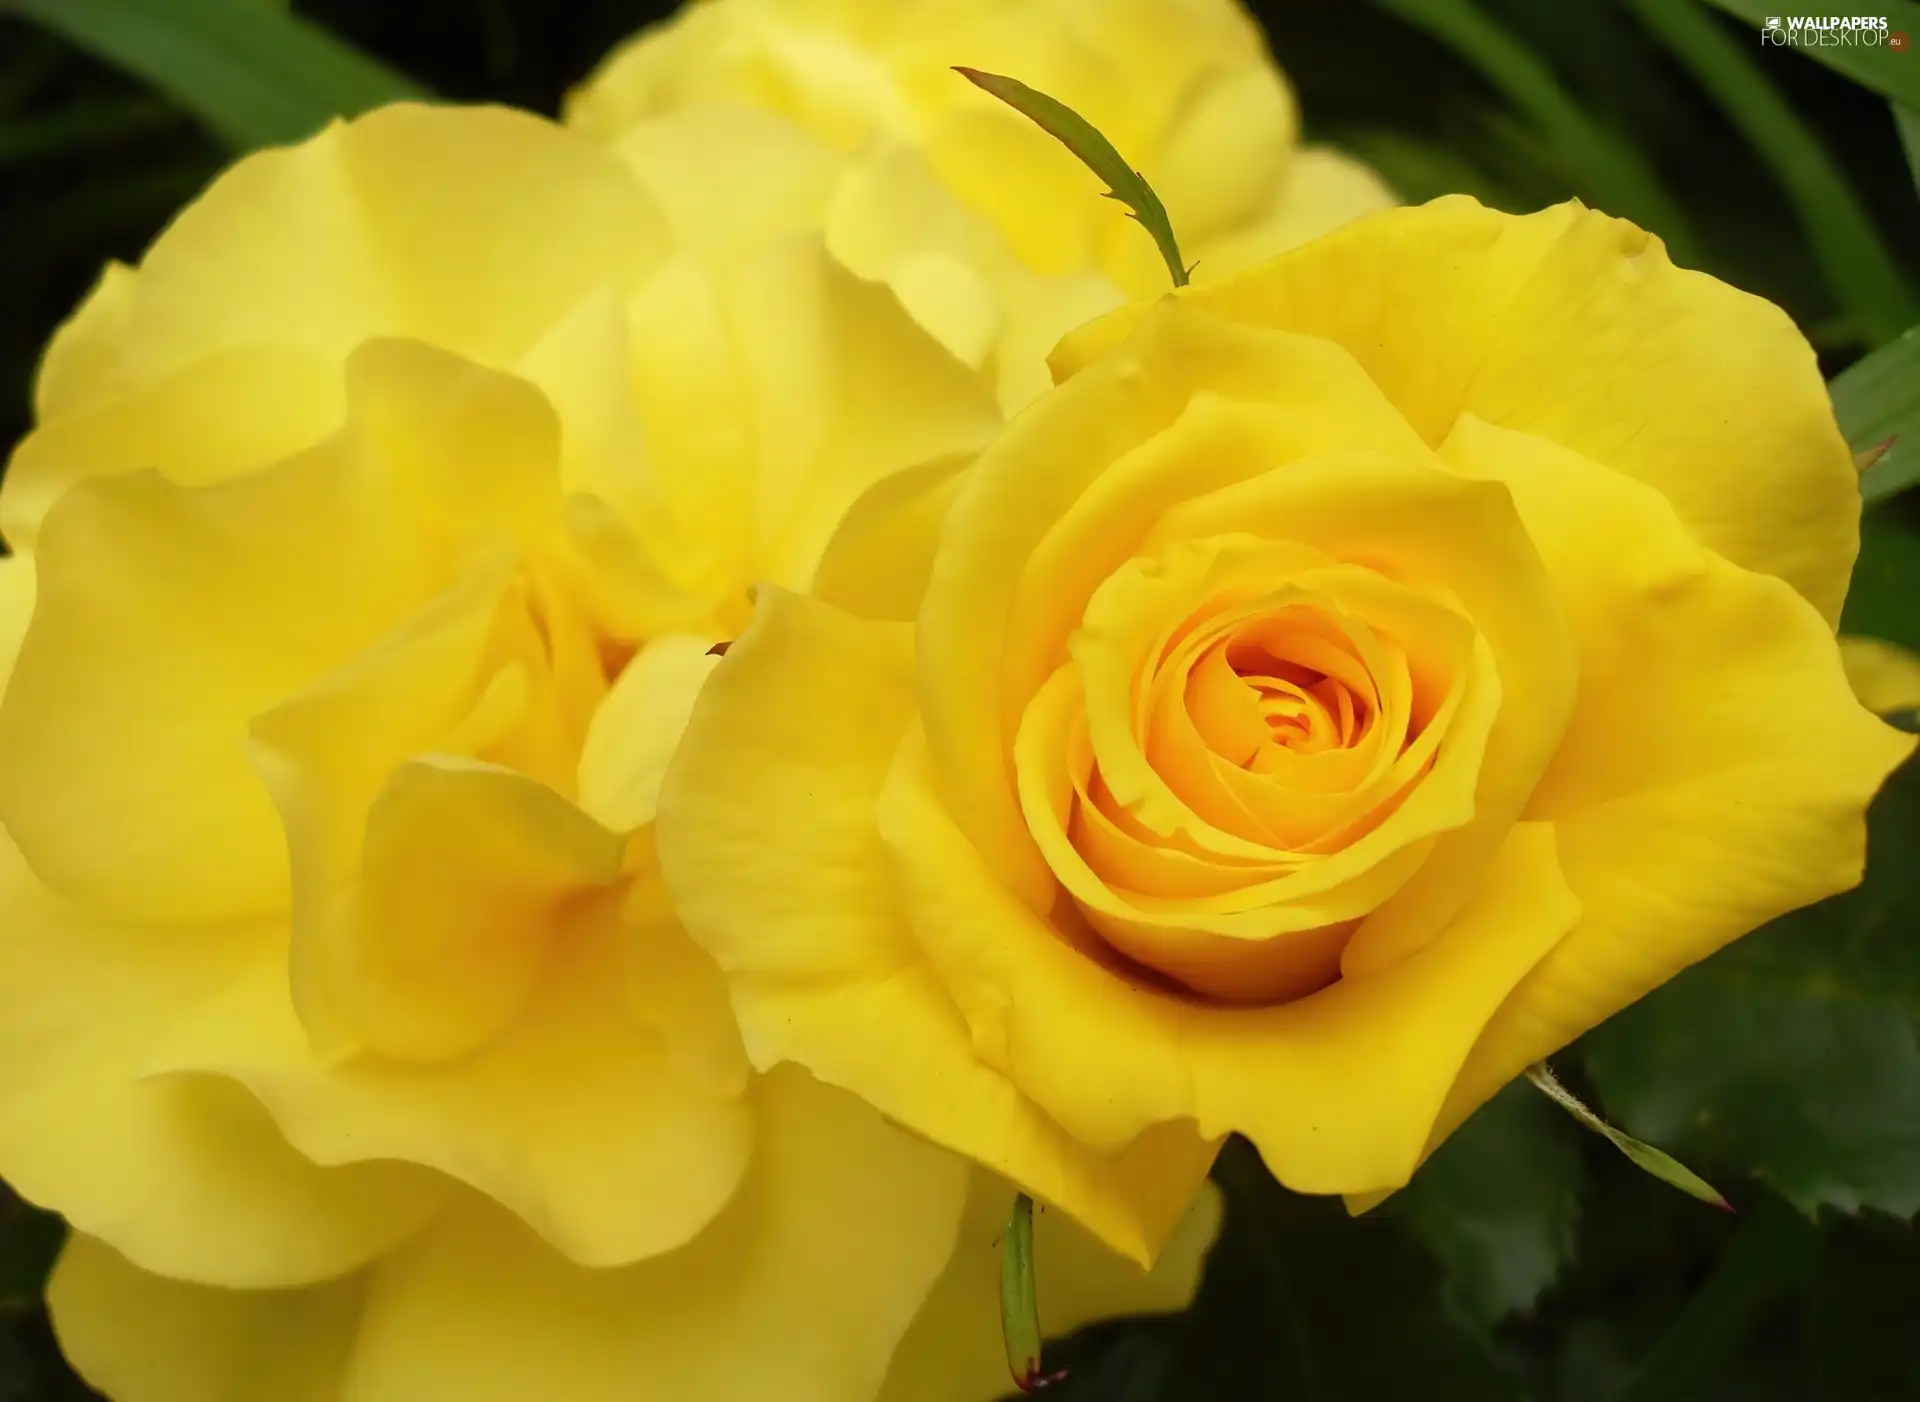 Yellow, roses